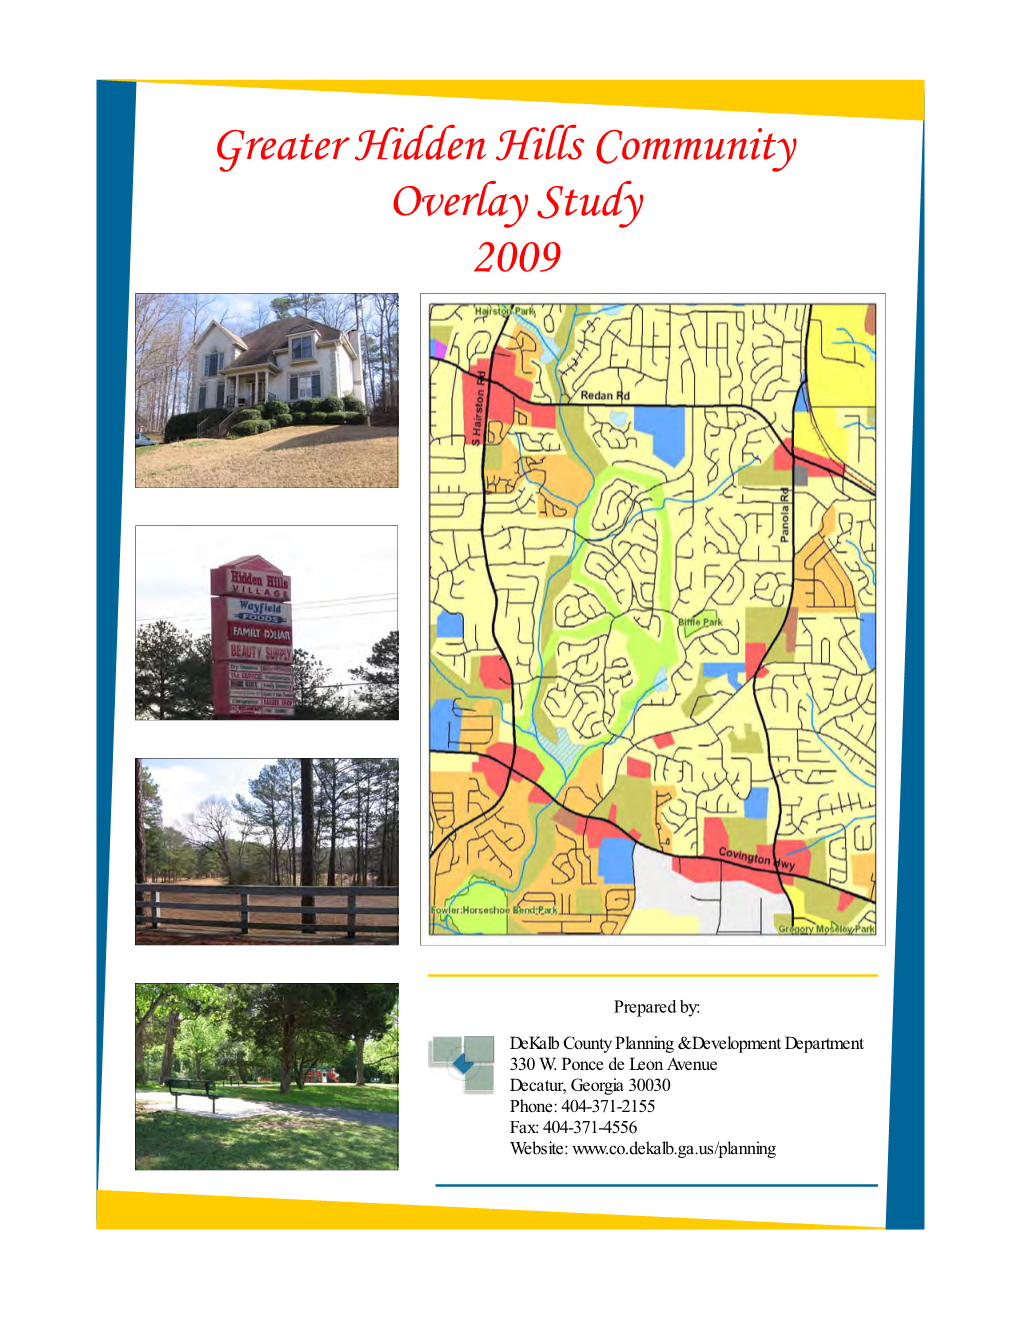 Greater Hidden Hills Community Overlay Study 2009